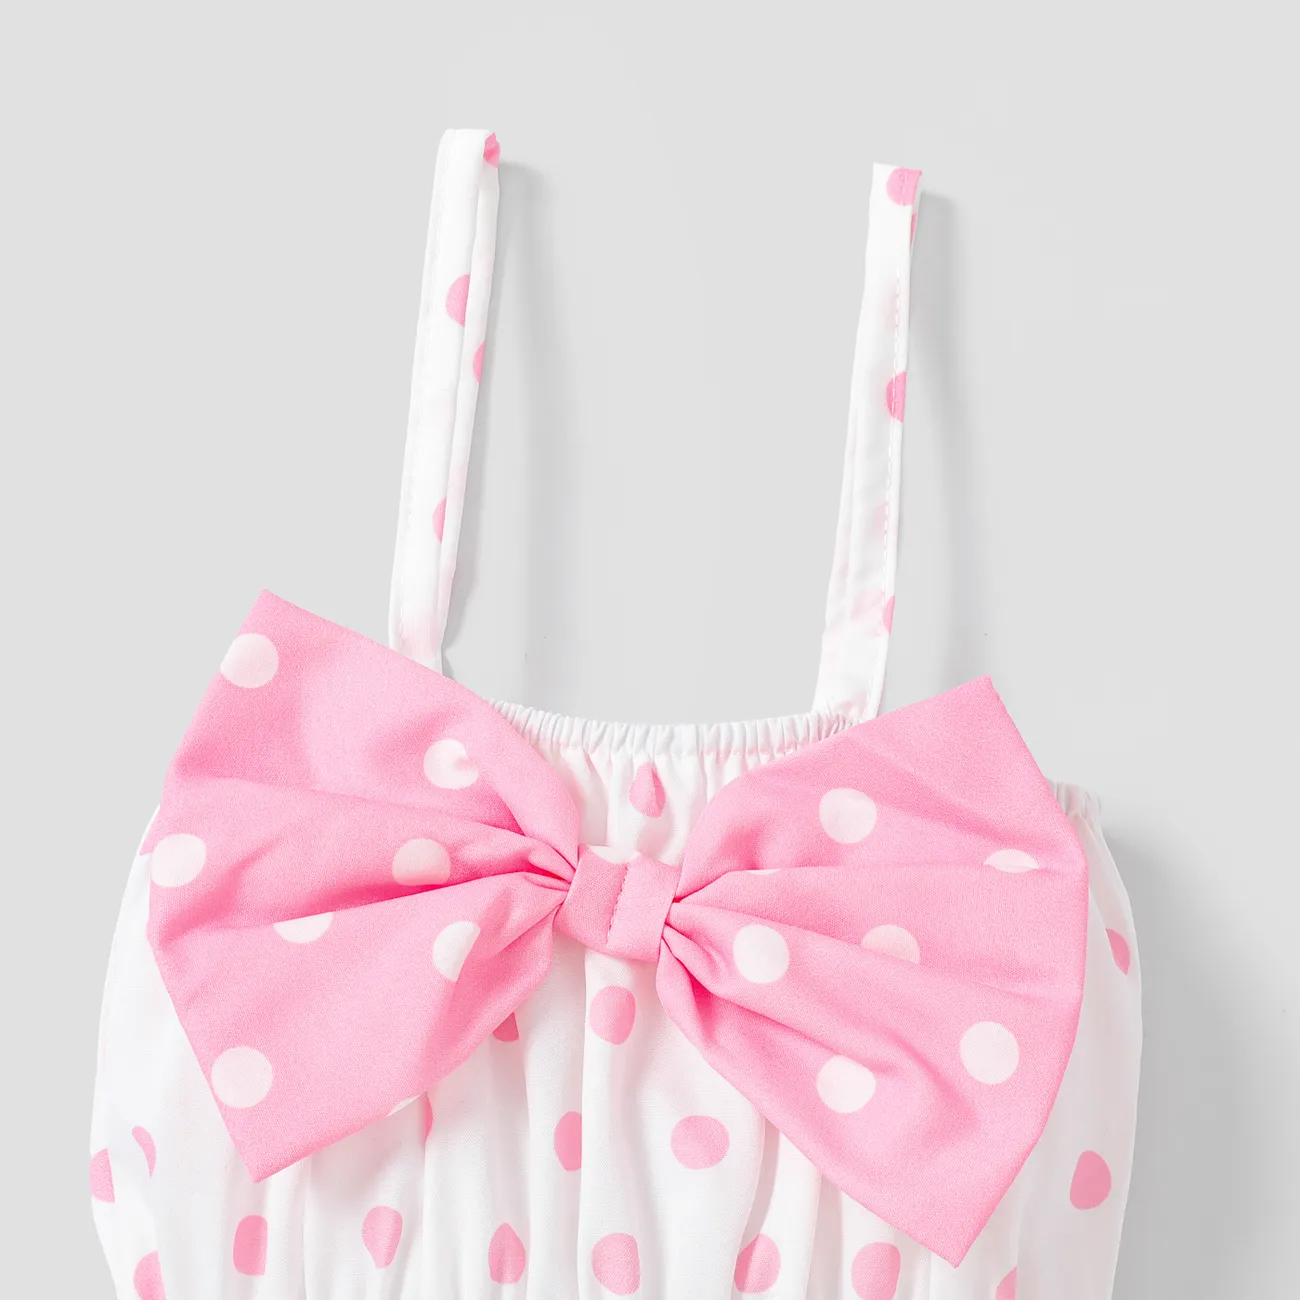 2pcs Baby Girl Allover Dots Bowknot Sleeveless Spaghetti Strap Romper with Headband Set Pink big image 1